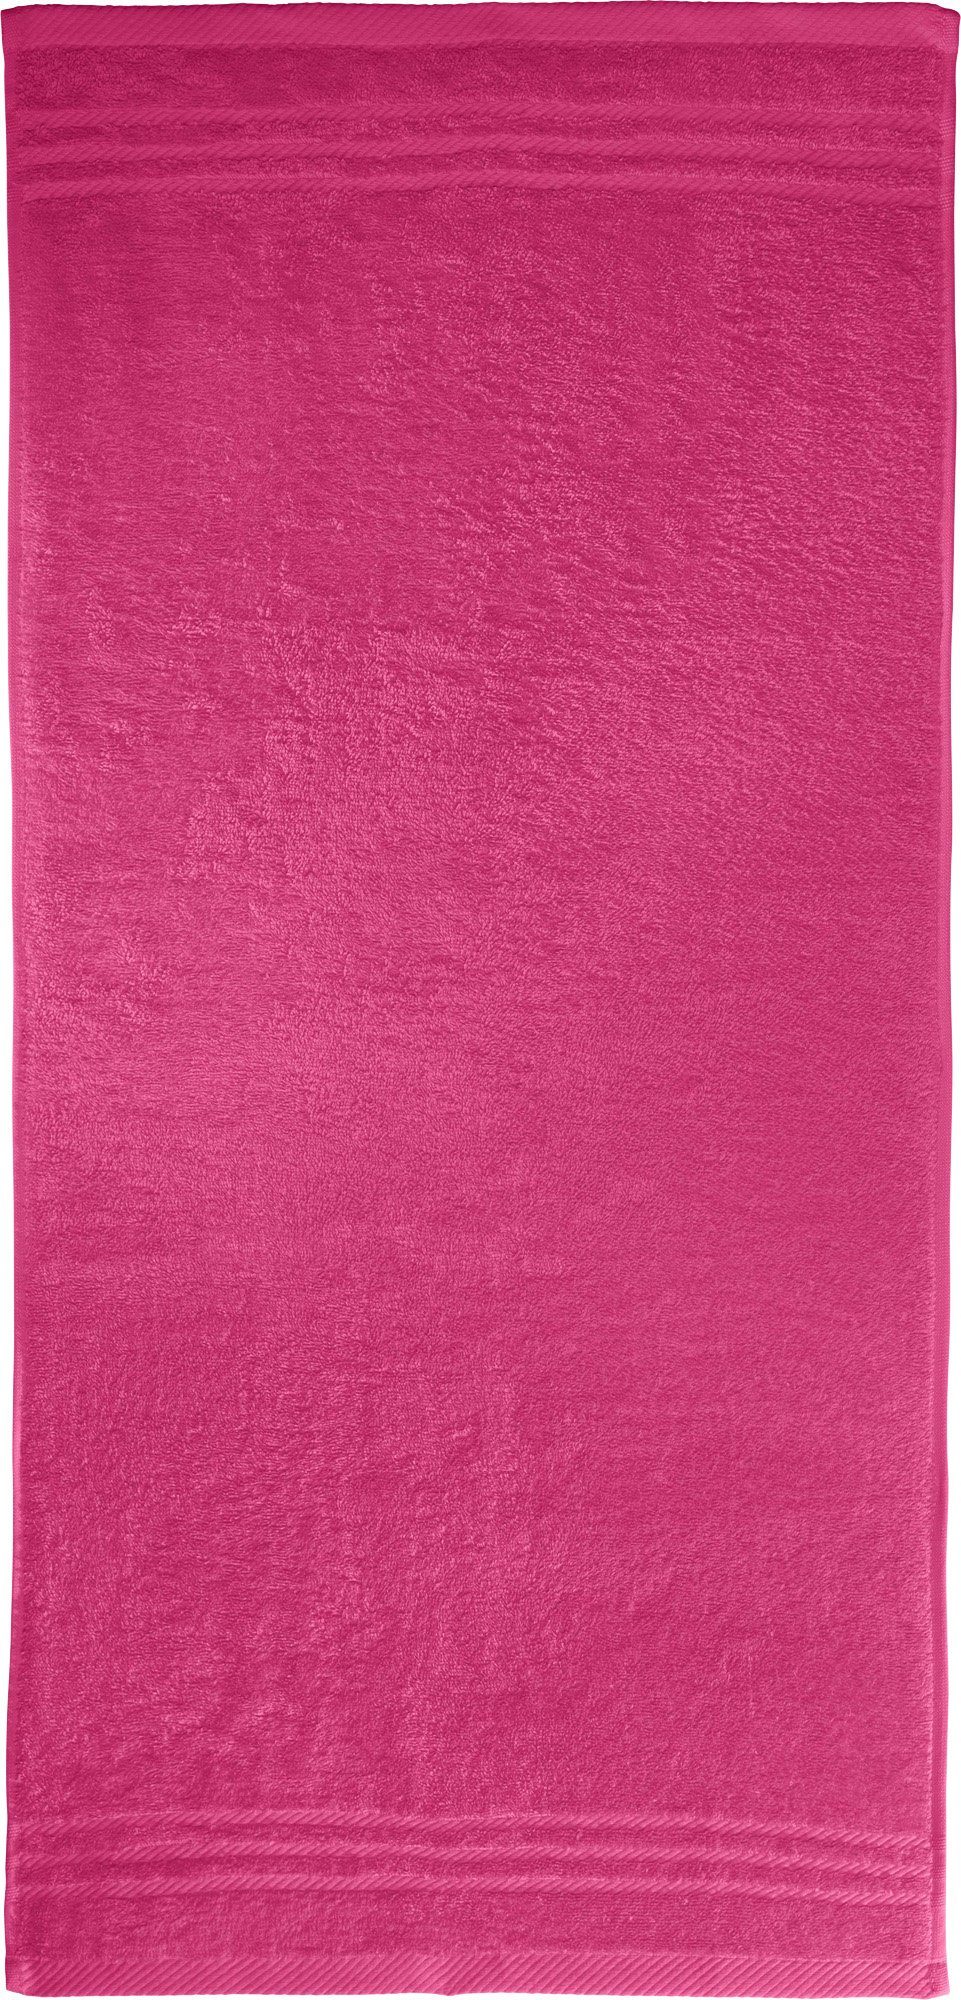 (1-St), Uni REDBEST Walk-Frottier Handtuch, pink Handtuch Frottier